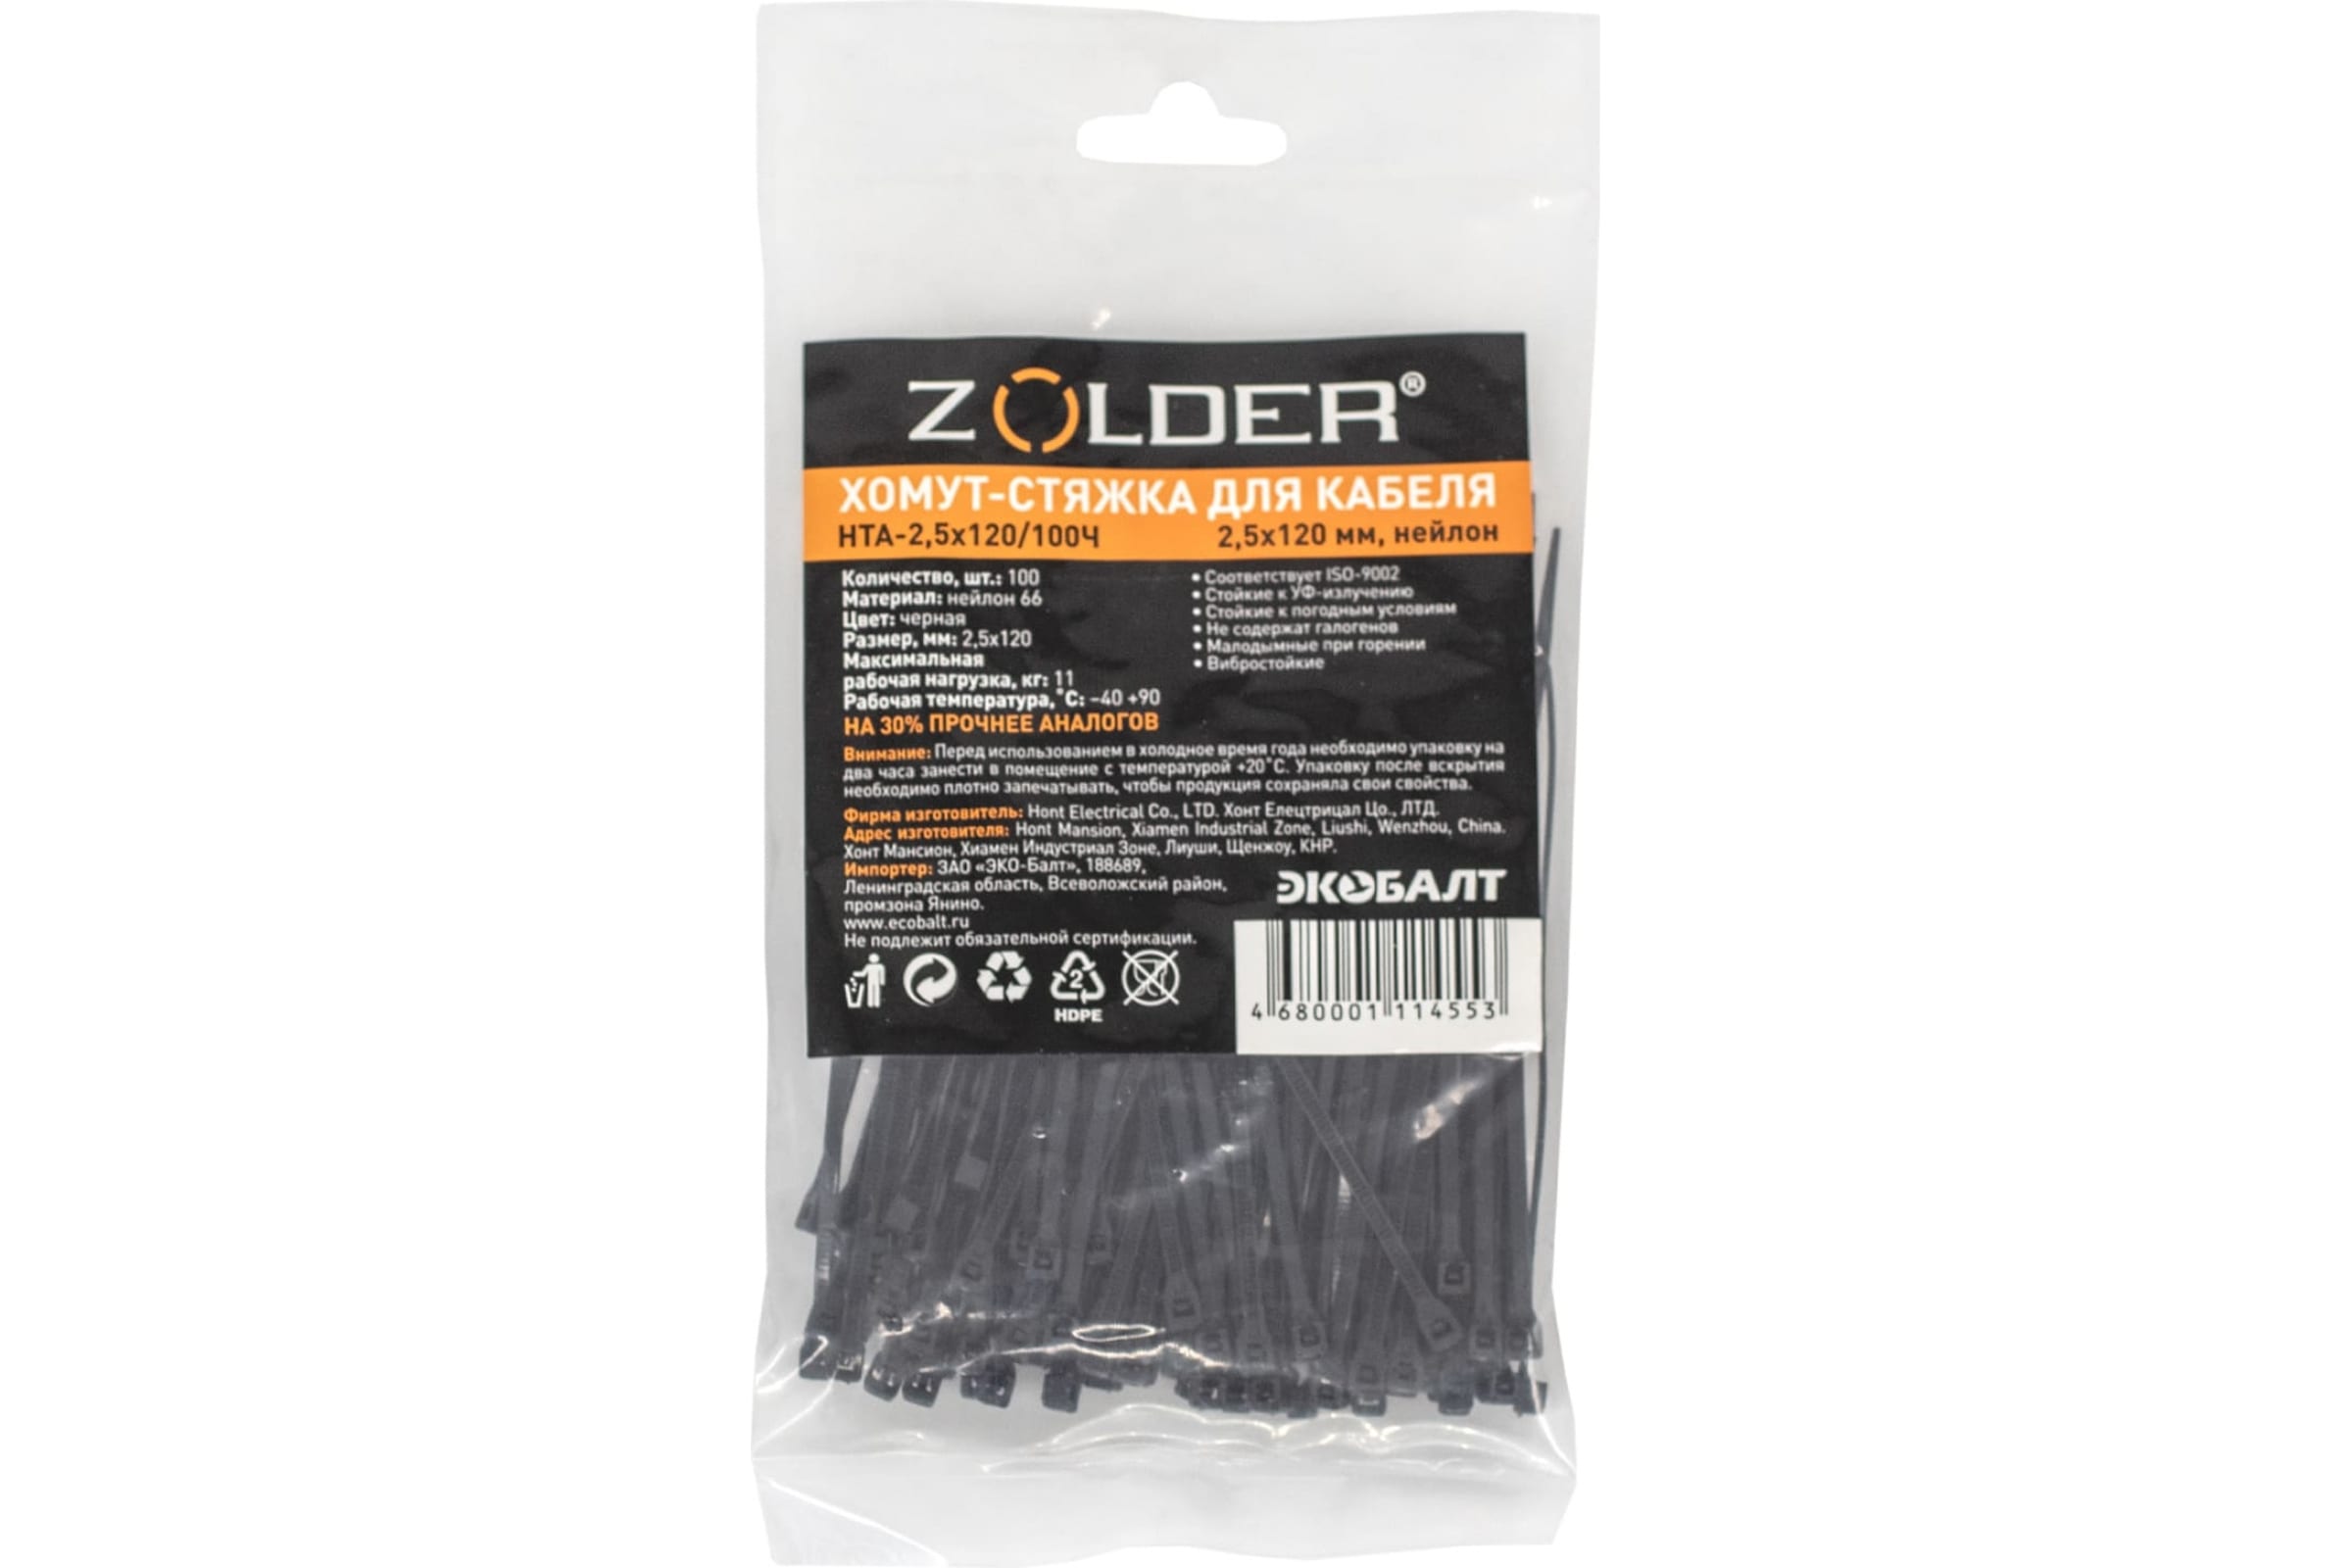 Стяжка для кабеля ZOLDER 2,5х120мм нейлон, черная (100шт) 1/350 НТА-2,5х120/100Ч